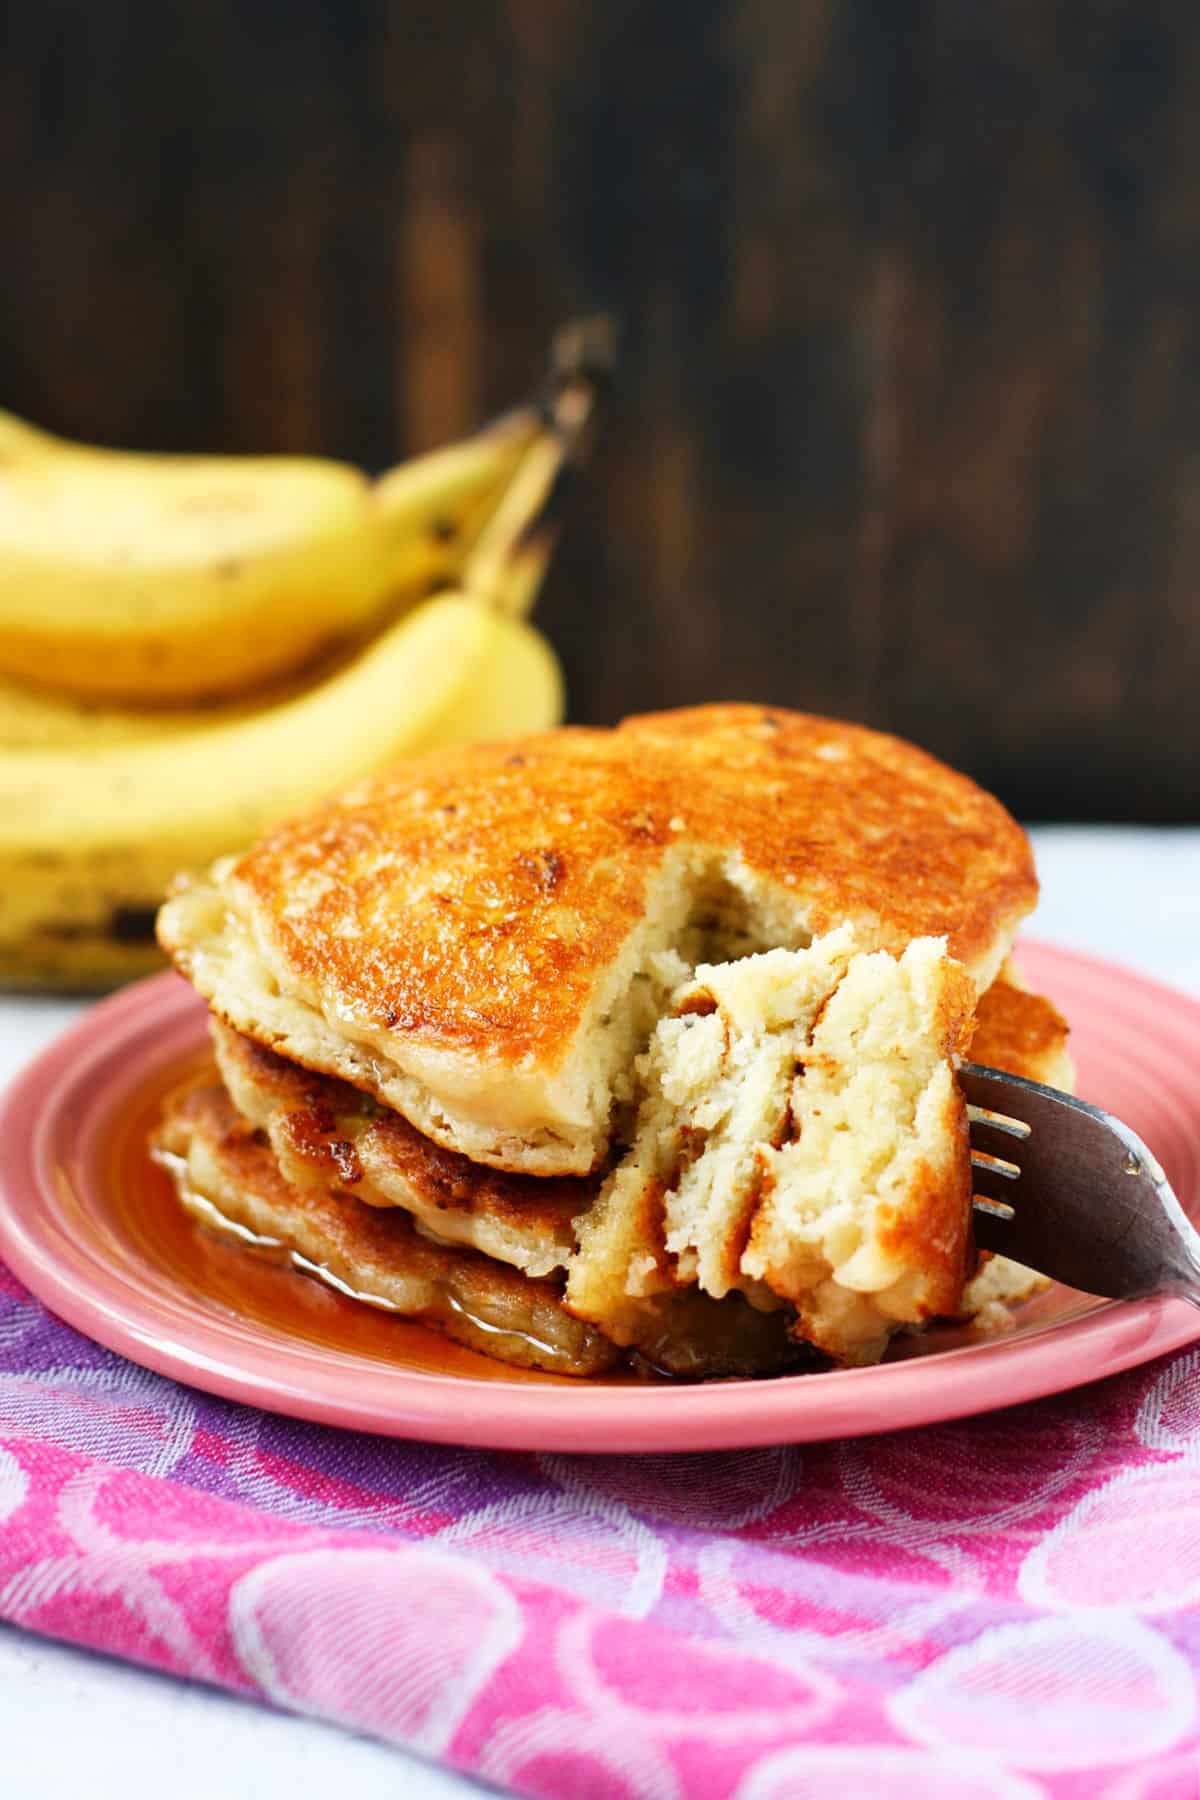 the best vegan banana pancakes